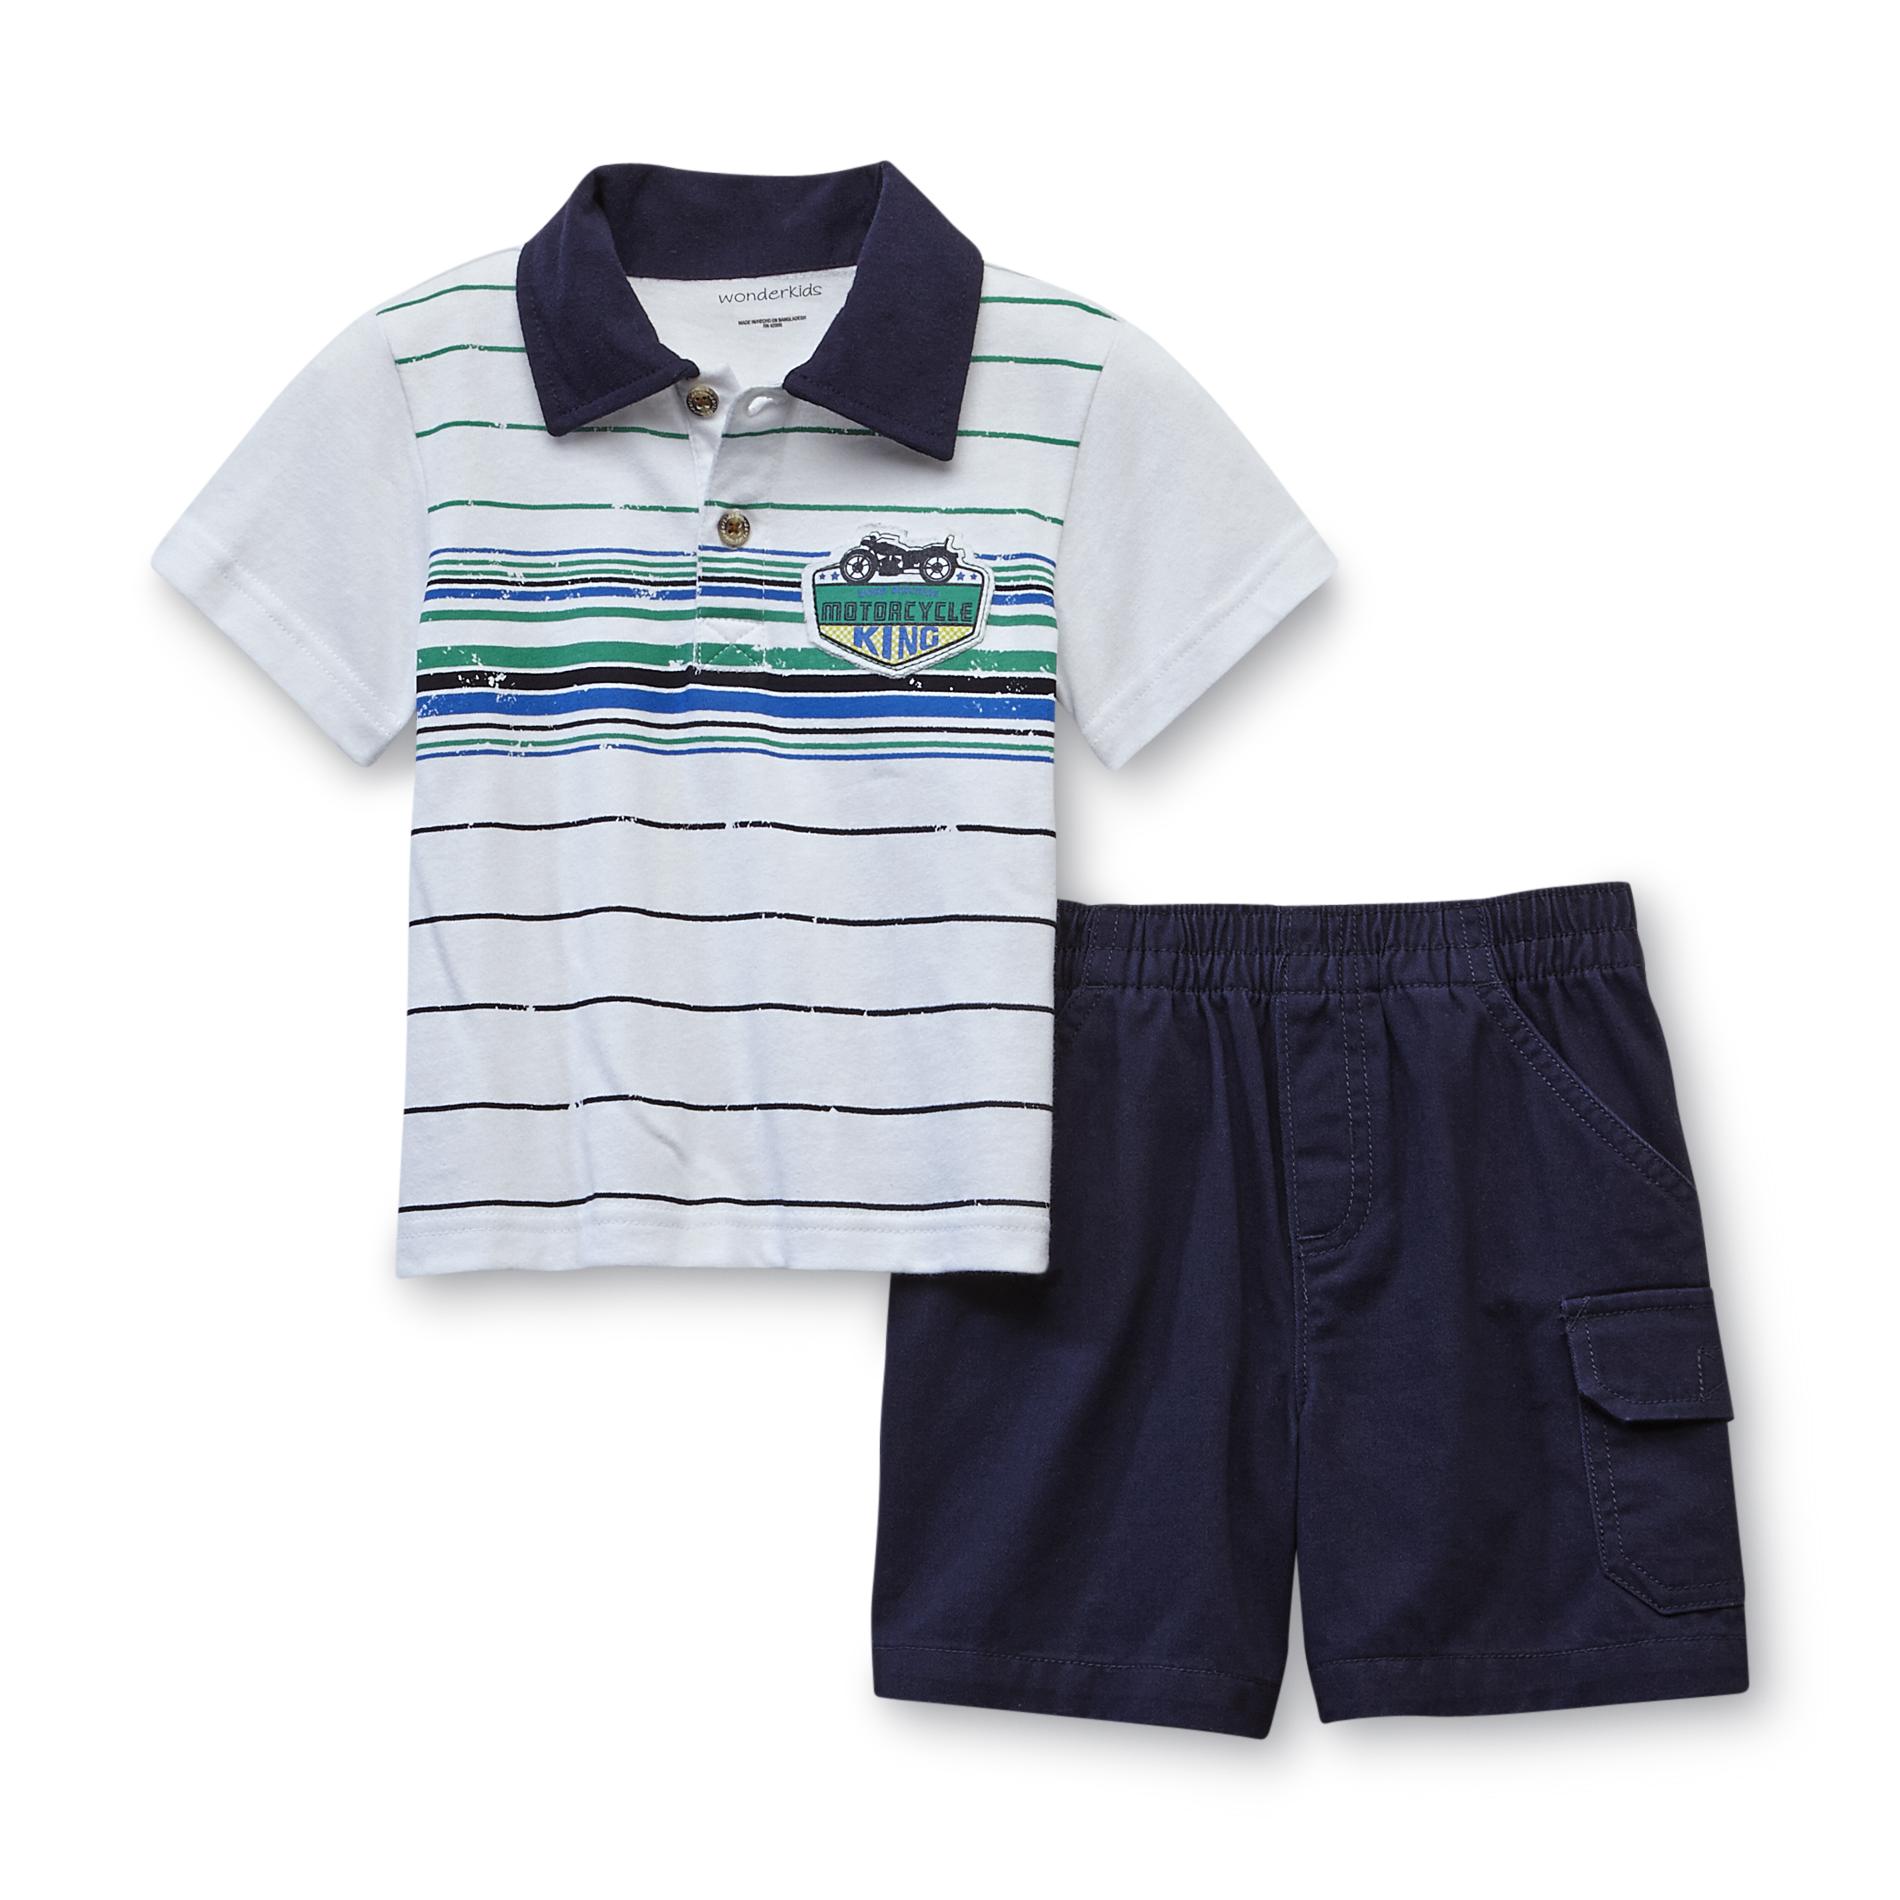 WonderKids Infant & Toddler Boy's Polo Shirt & Shorts - Striped